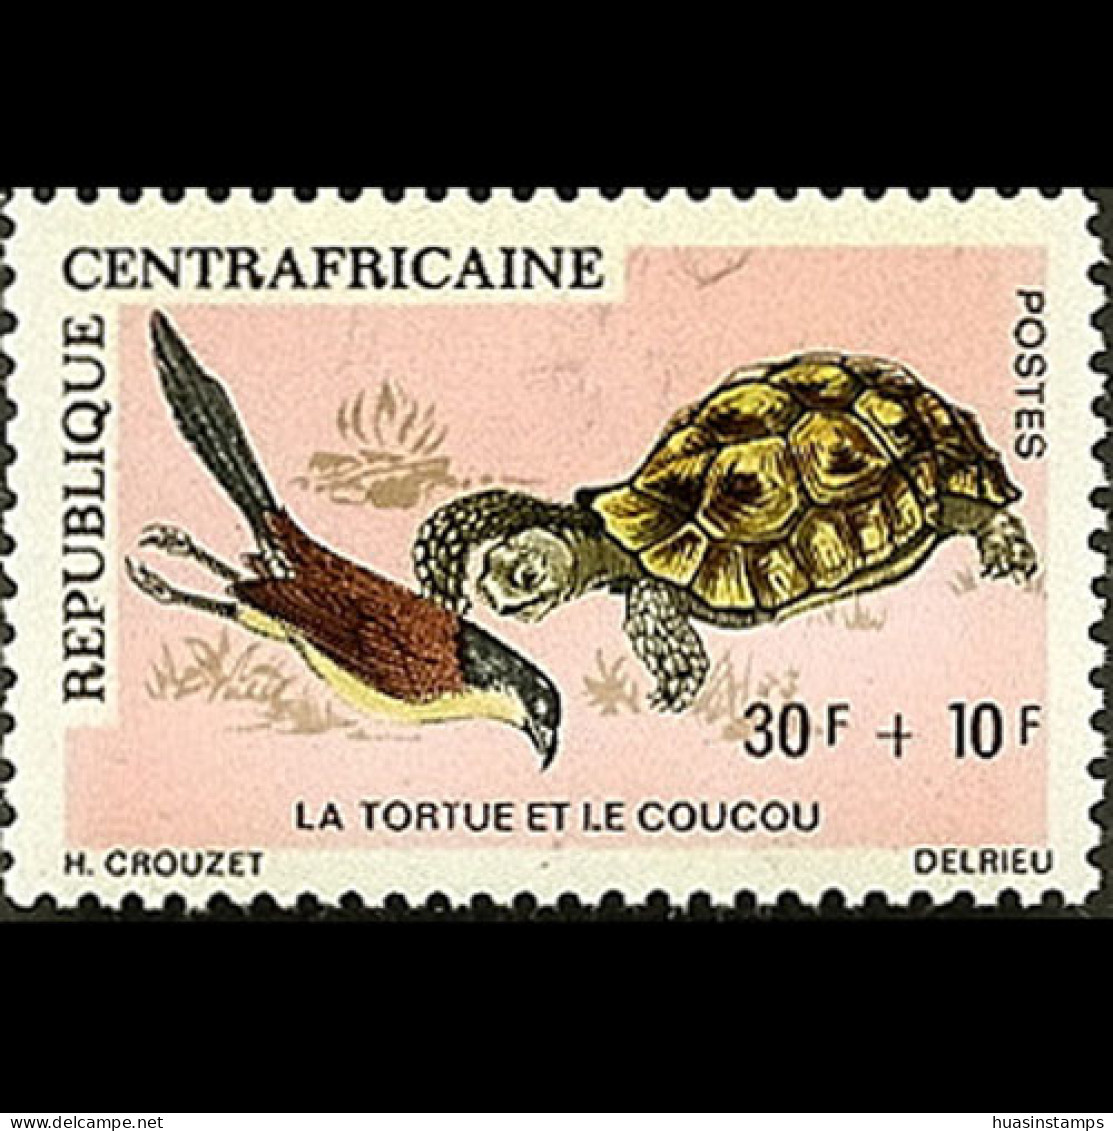 CENTRAL AFRICA 1971 - Scott# B6 Wildlife 30f MNH - Central African Republic